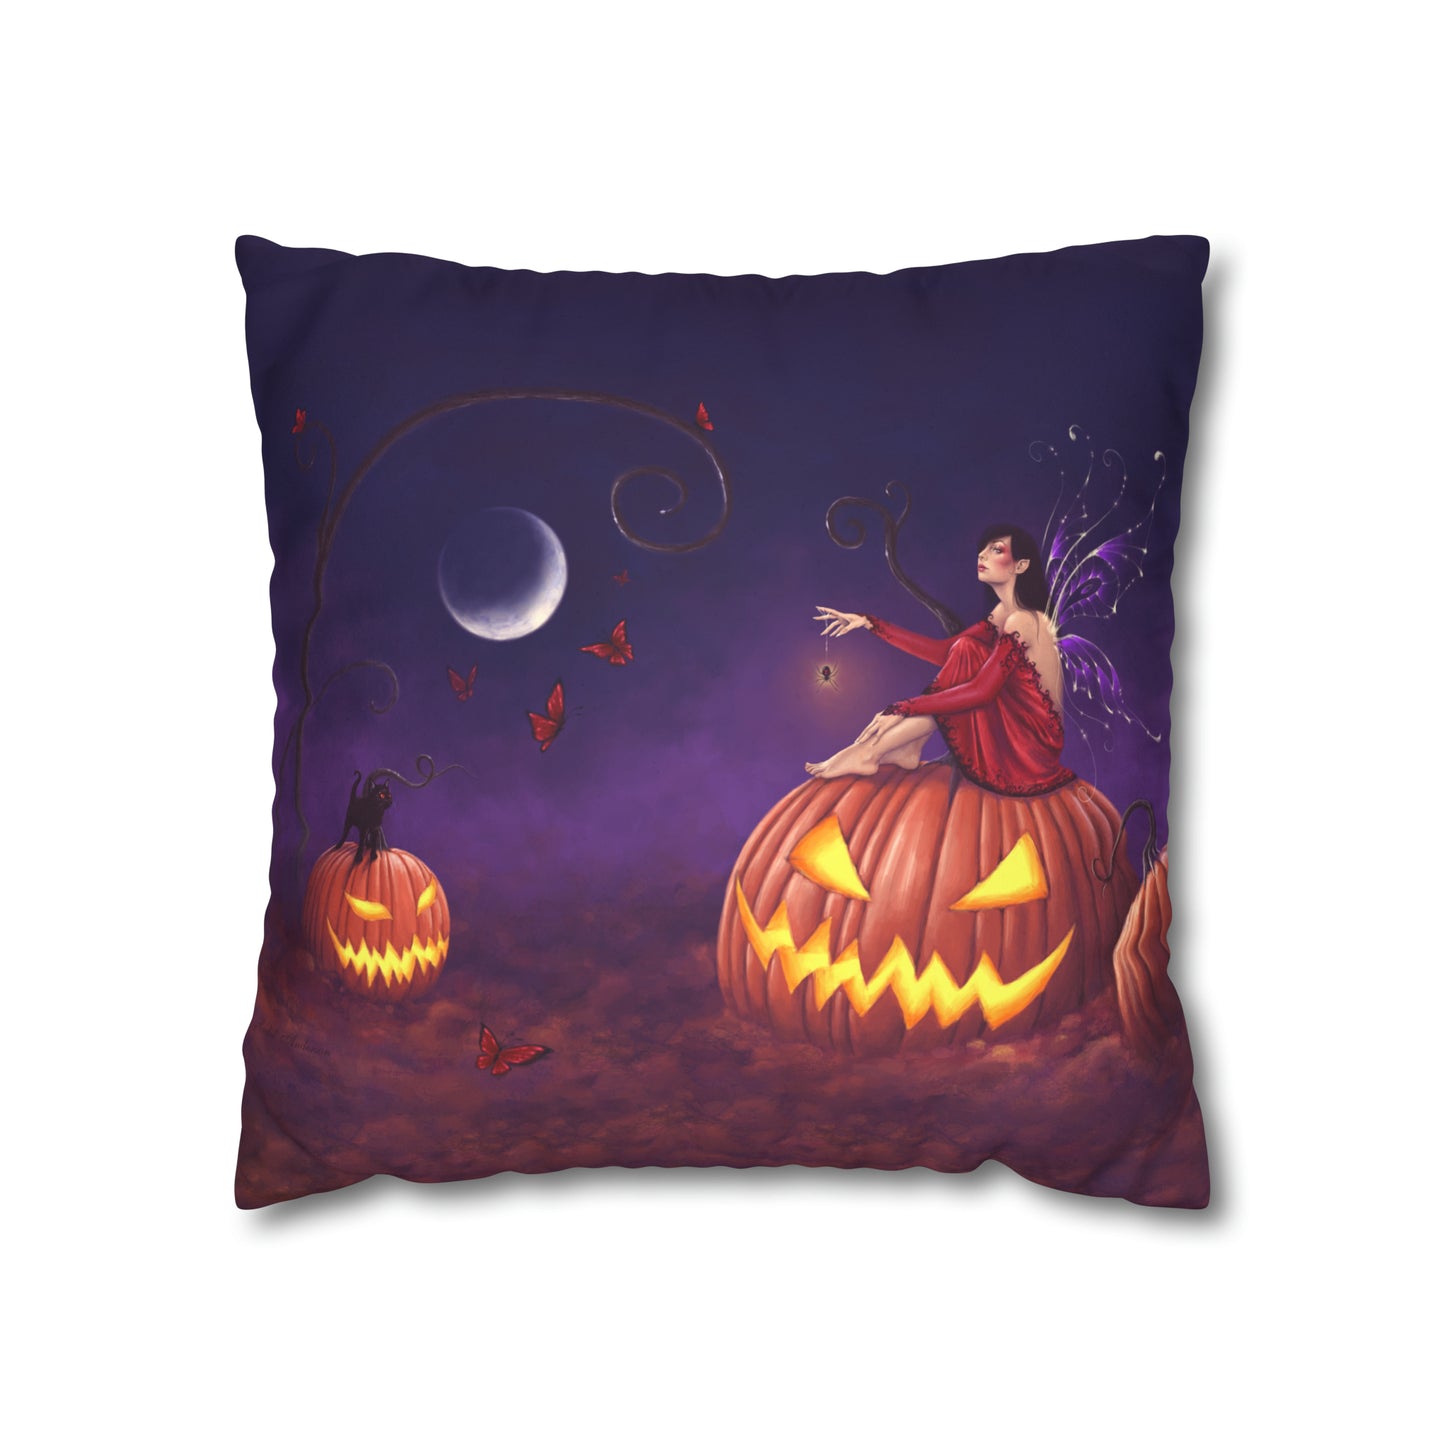 Throw Pillow Cover - Pumpkin Pixie